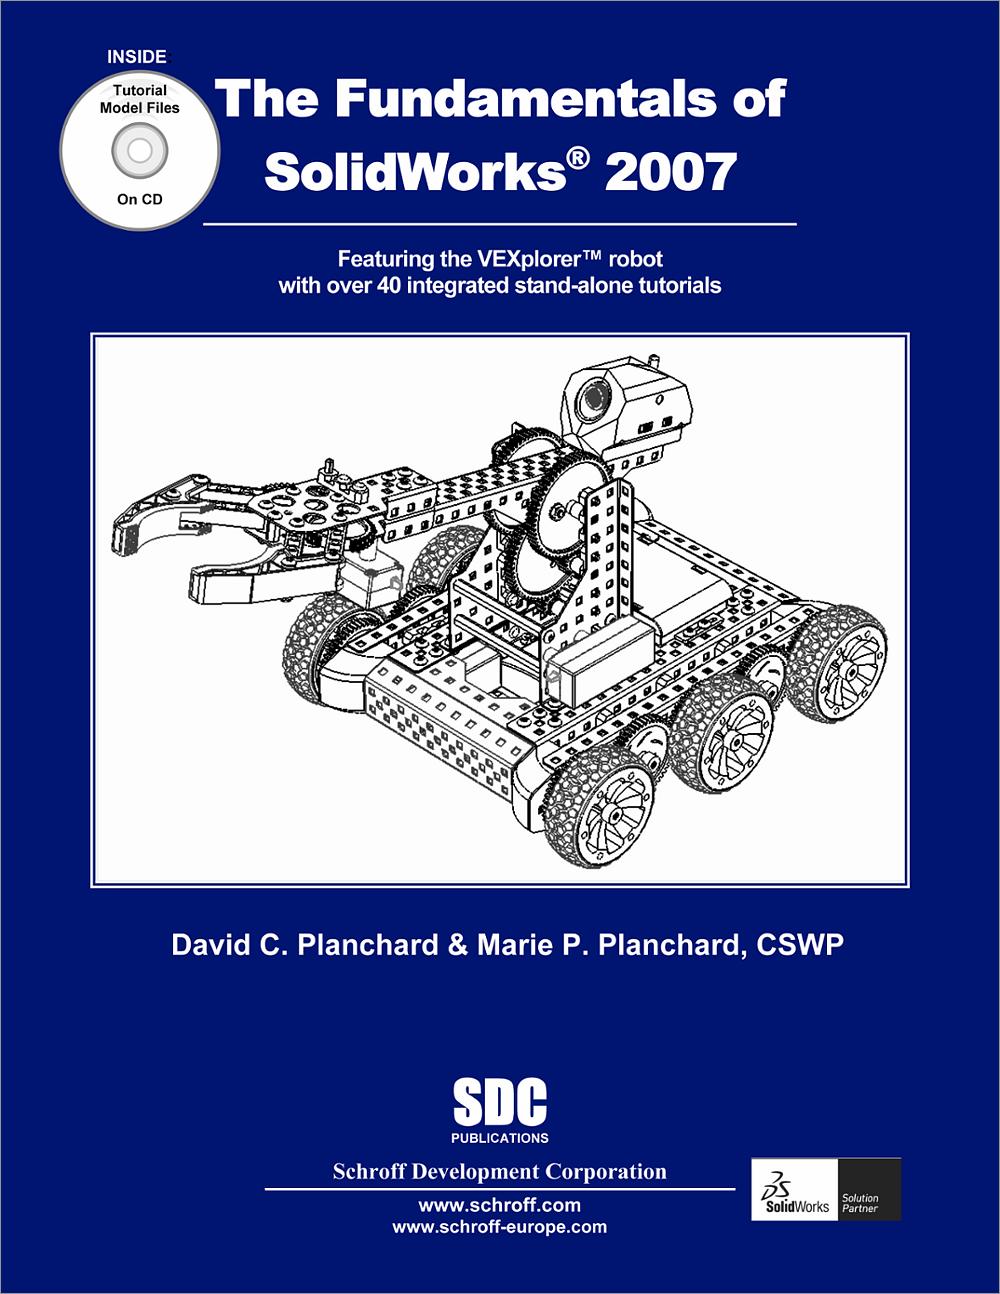 solidworks 2007 tutorial pdf free download